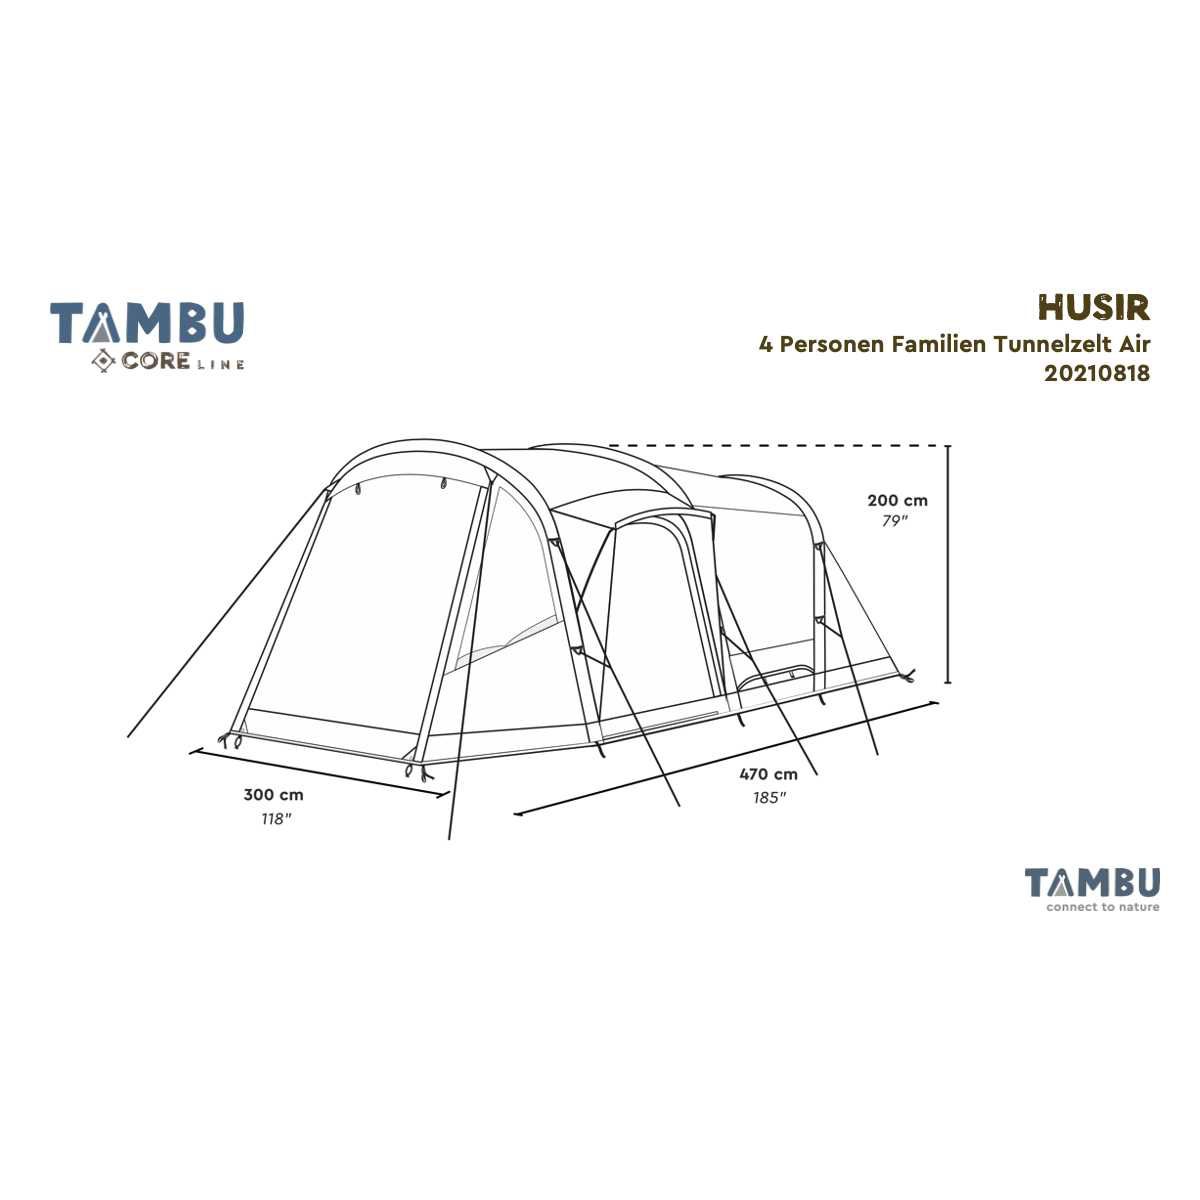 TAMBU HUSIR Air Familien Tunnelzelt Beige 4 Personen - 20210818